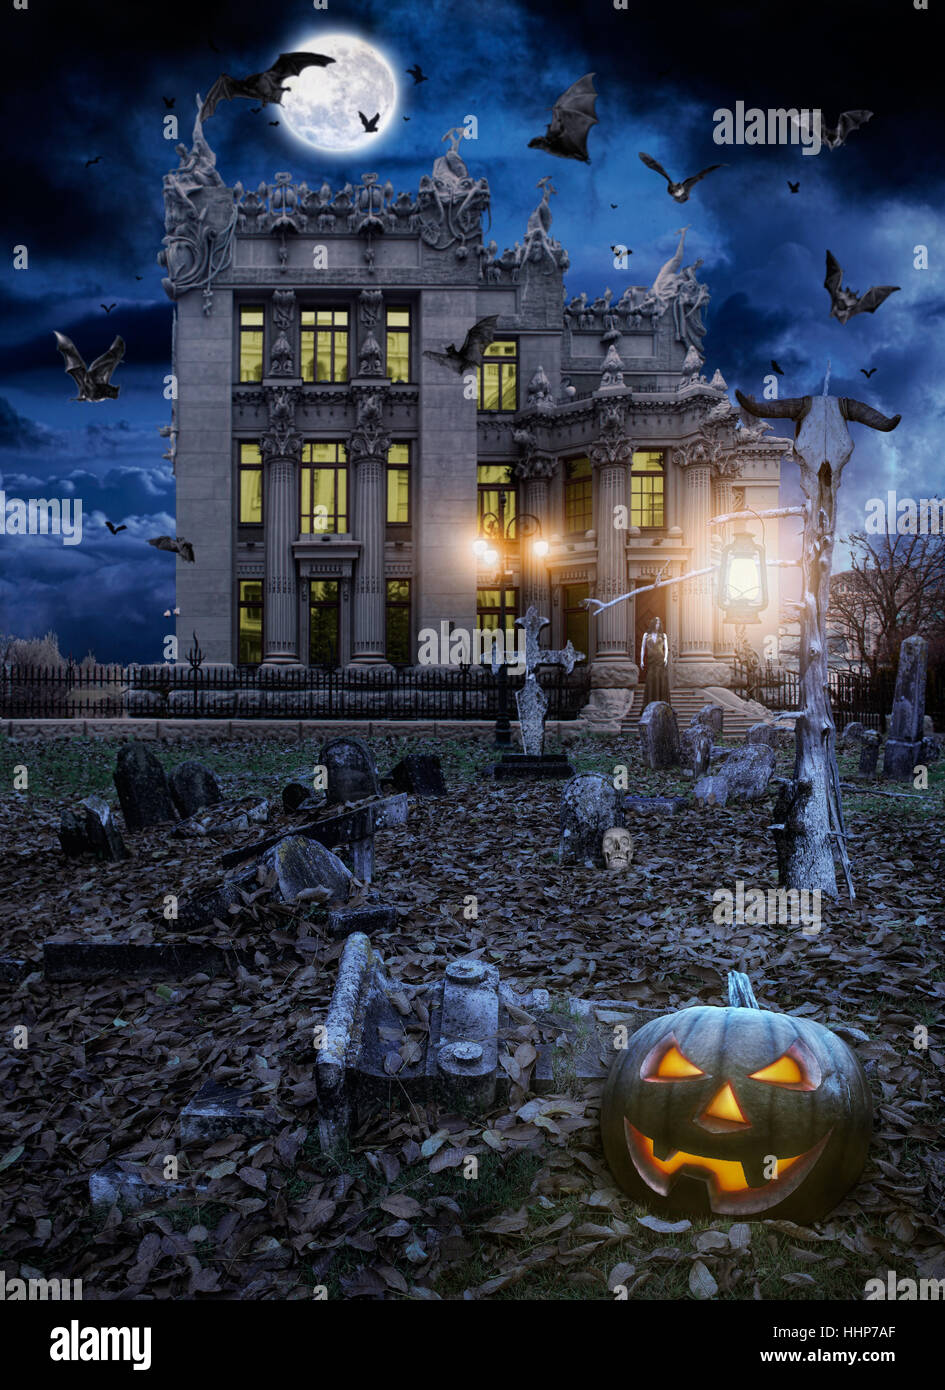 night, nighttime, moon, cemetery, fear, halloween, pumpkin, bats, house, Stock Photo